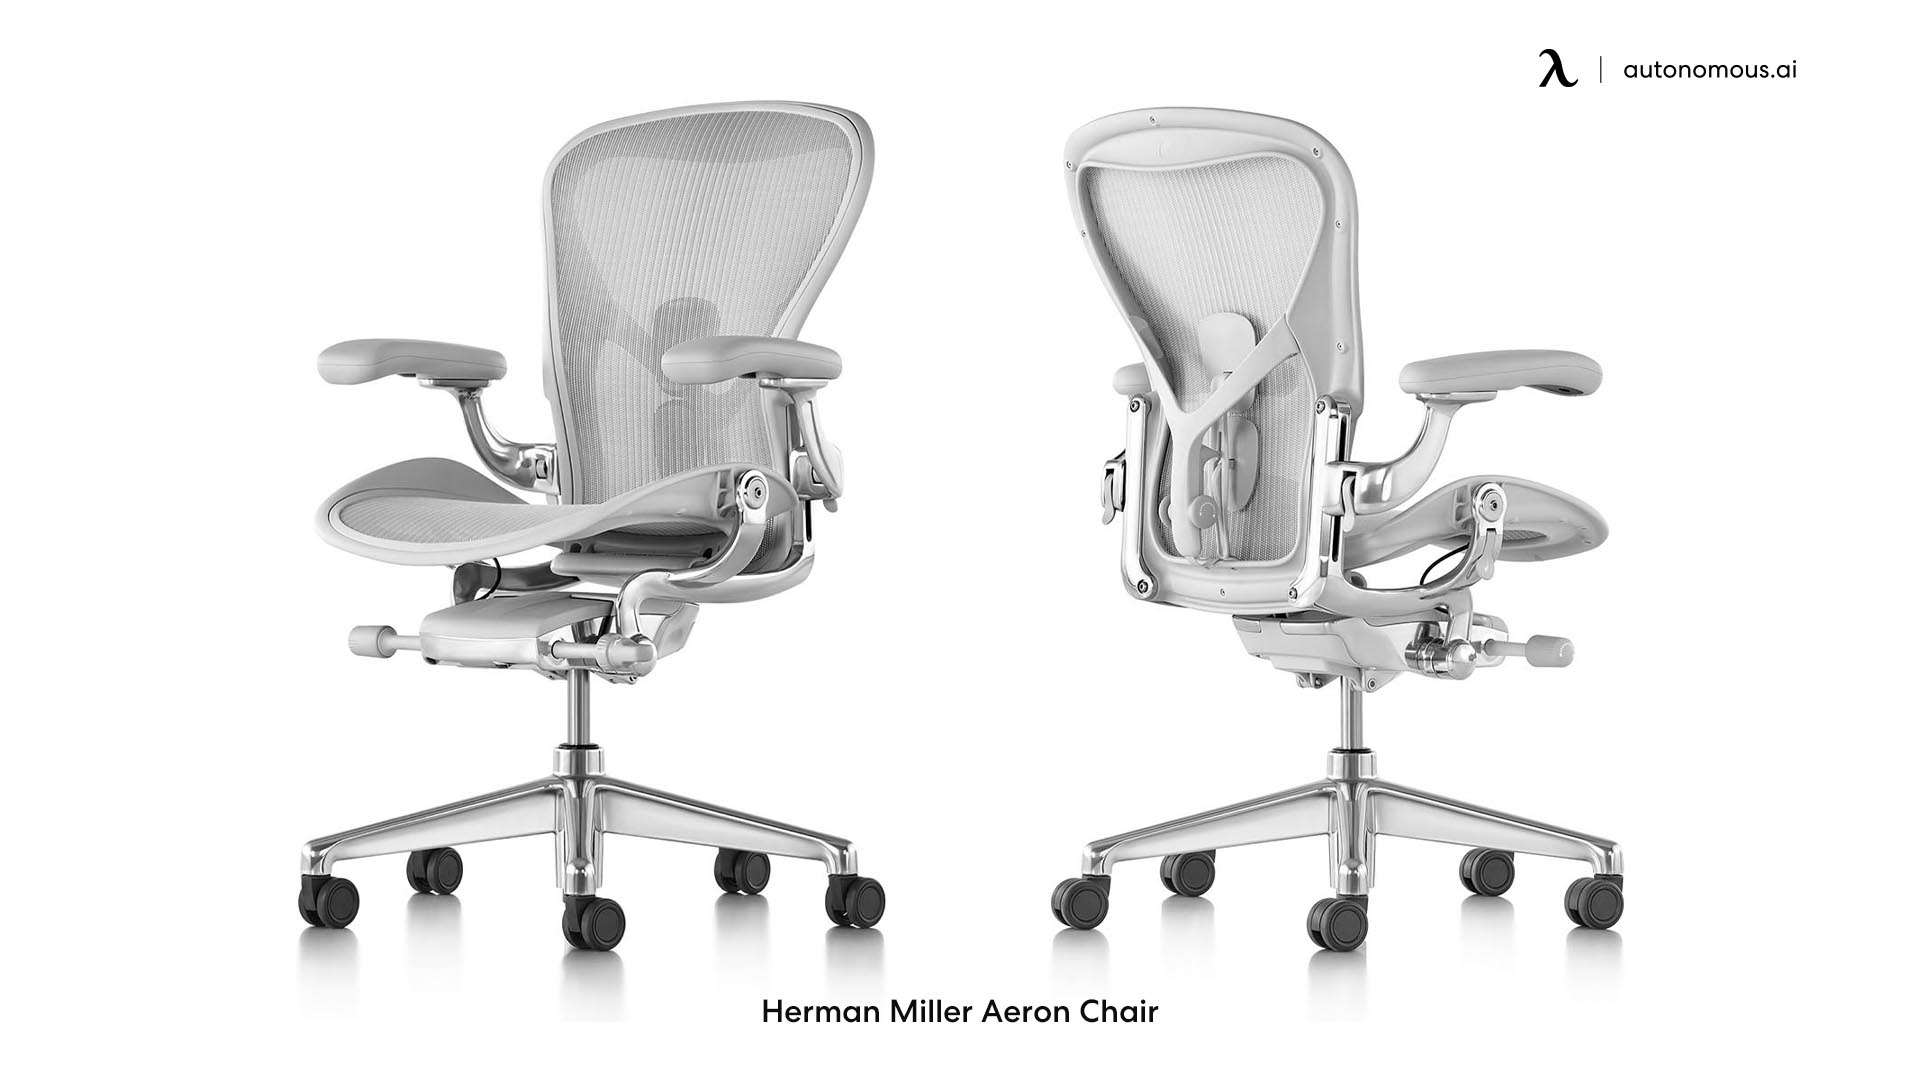 Aeron durable computer chair by Herman Miller